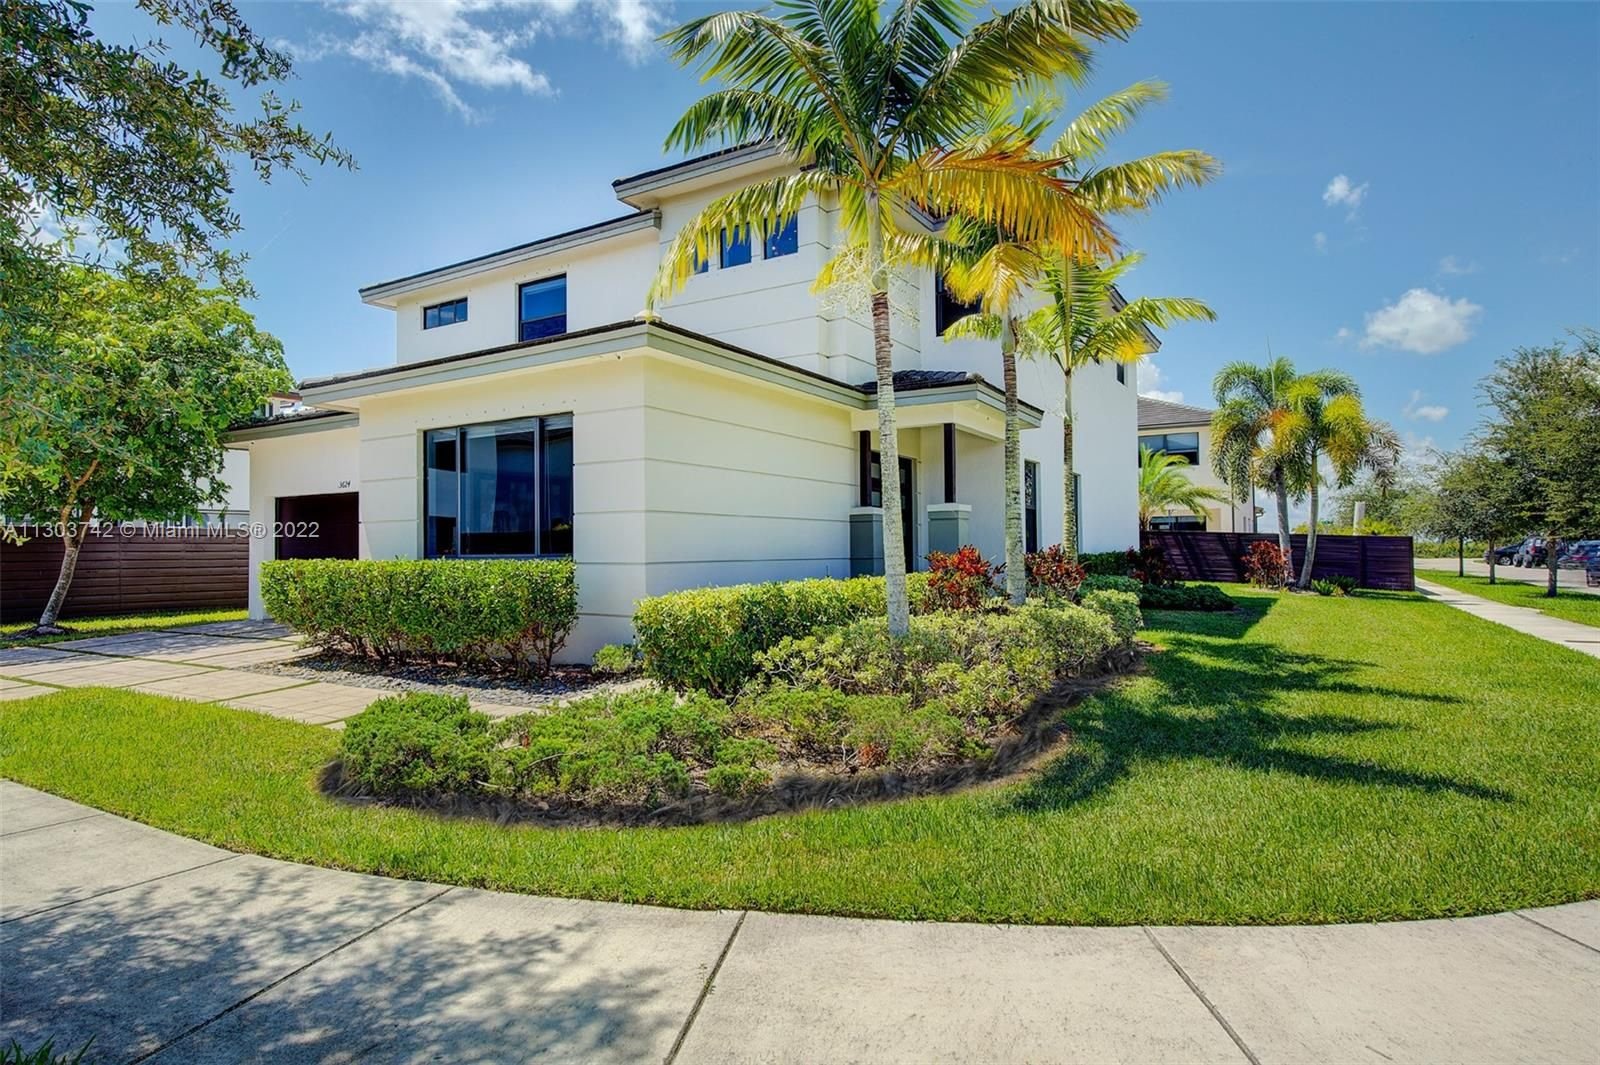 Real estate property located at 13624 161st Ct, Miami-Dade County, Miami, FL